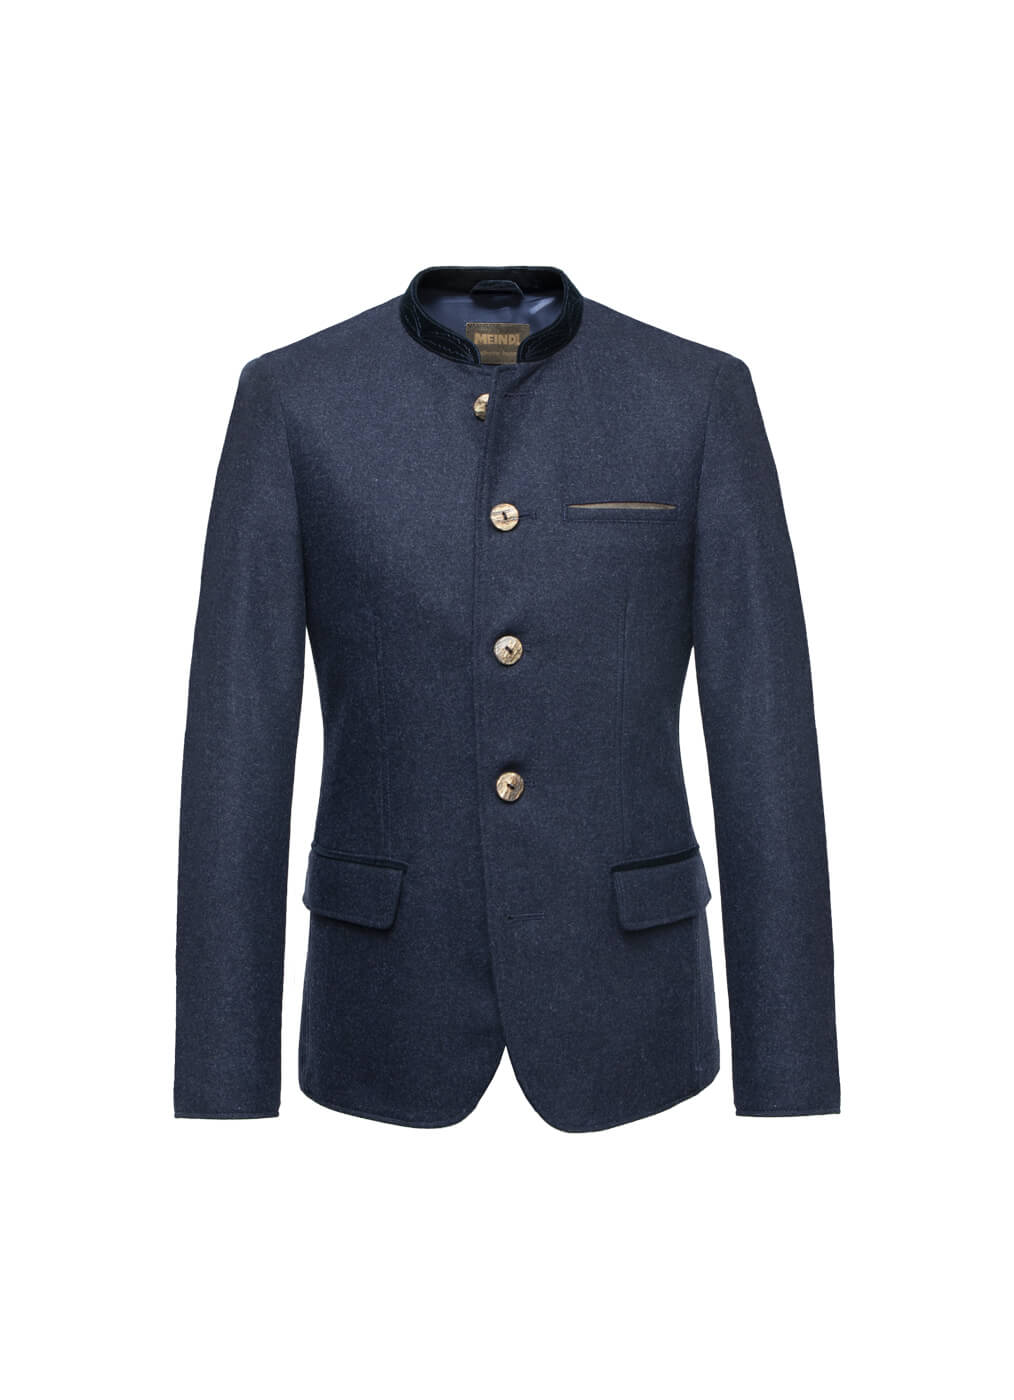 Fabric Jacket Men “Hochries”, navy